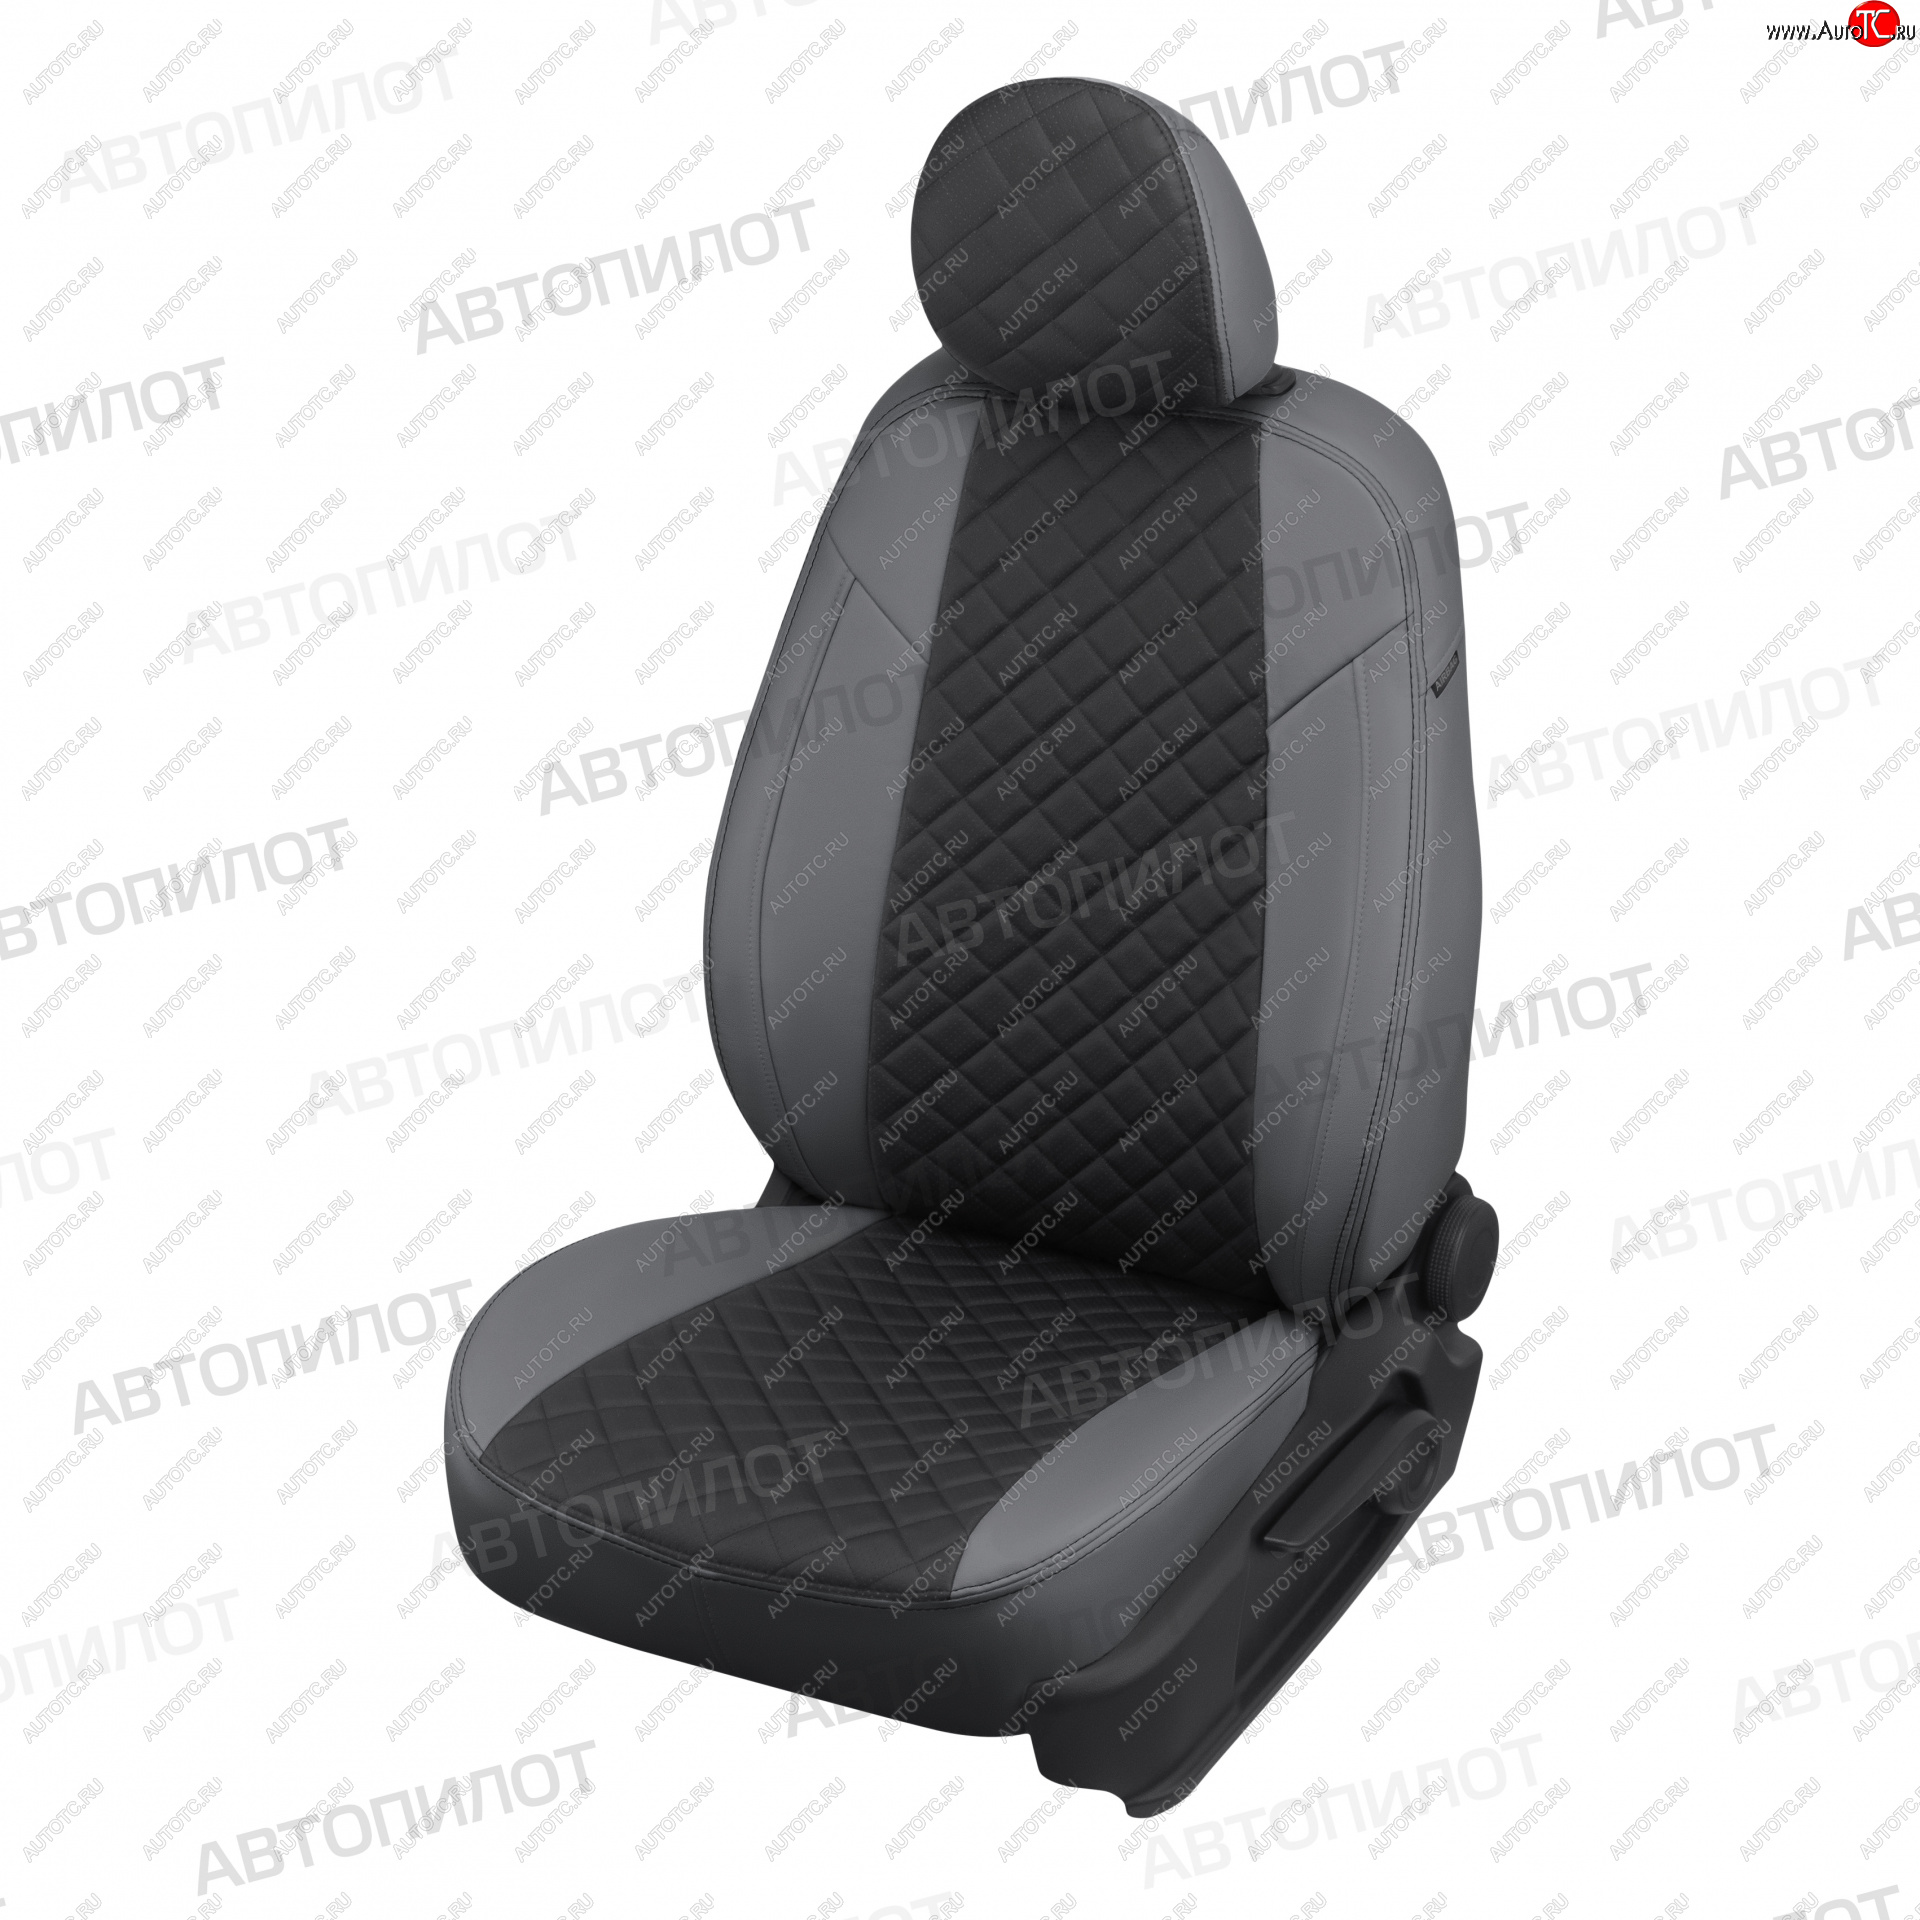 21 599 р. Чехлы сидений (экокожа, 8 мест) Автопилот Ромб  KIA Carnival  KA4 (2020-2024) (серый/черный)